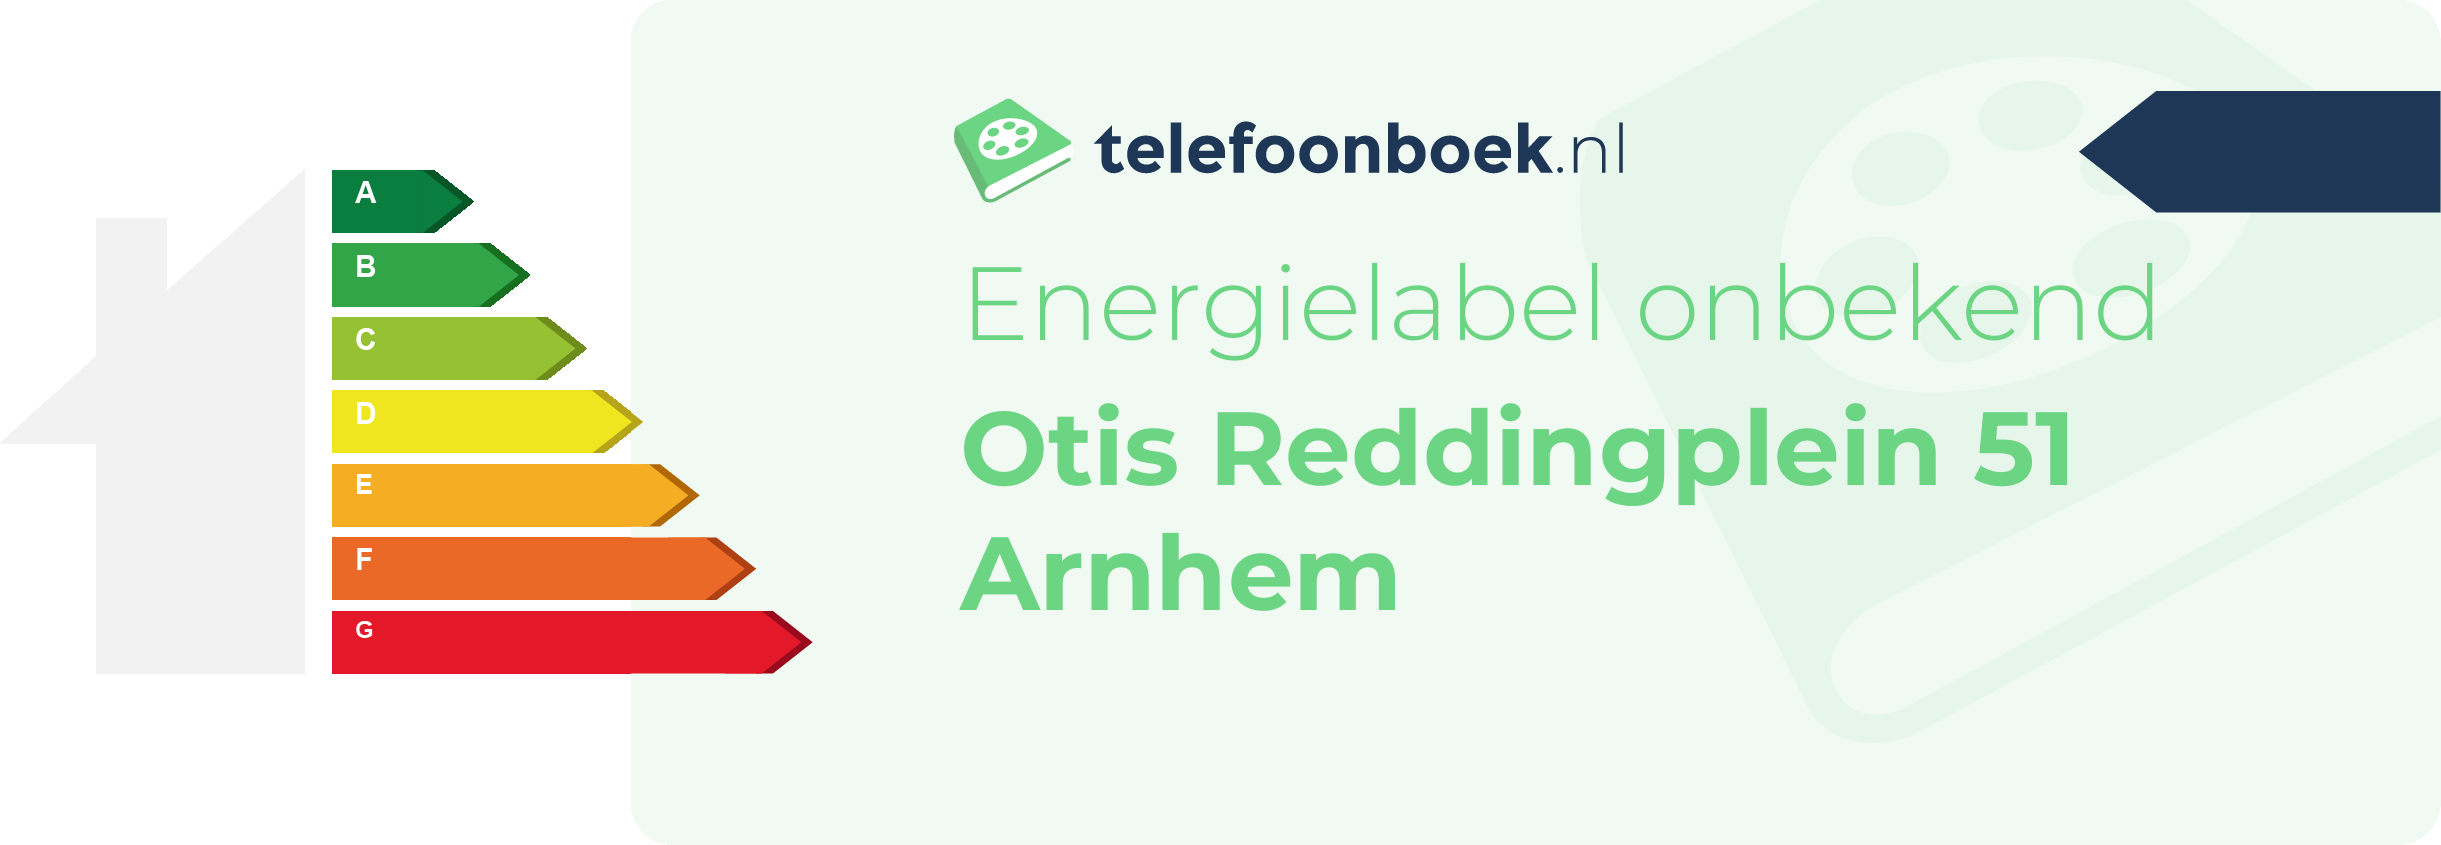 Energielabel Otis Reddingplein 51 Arnhem